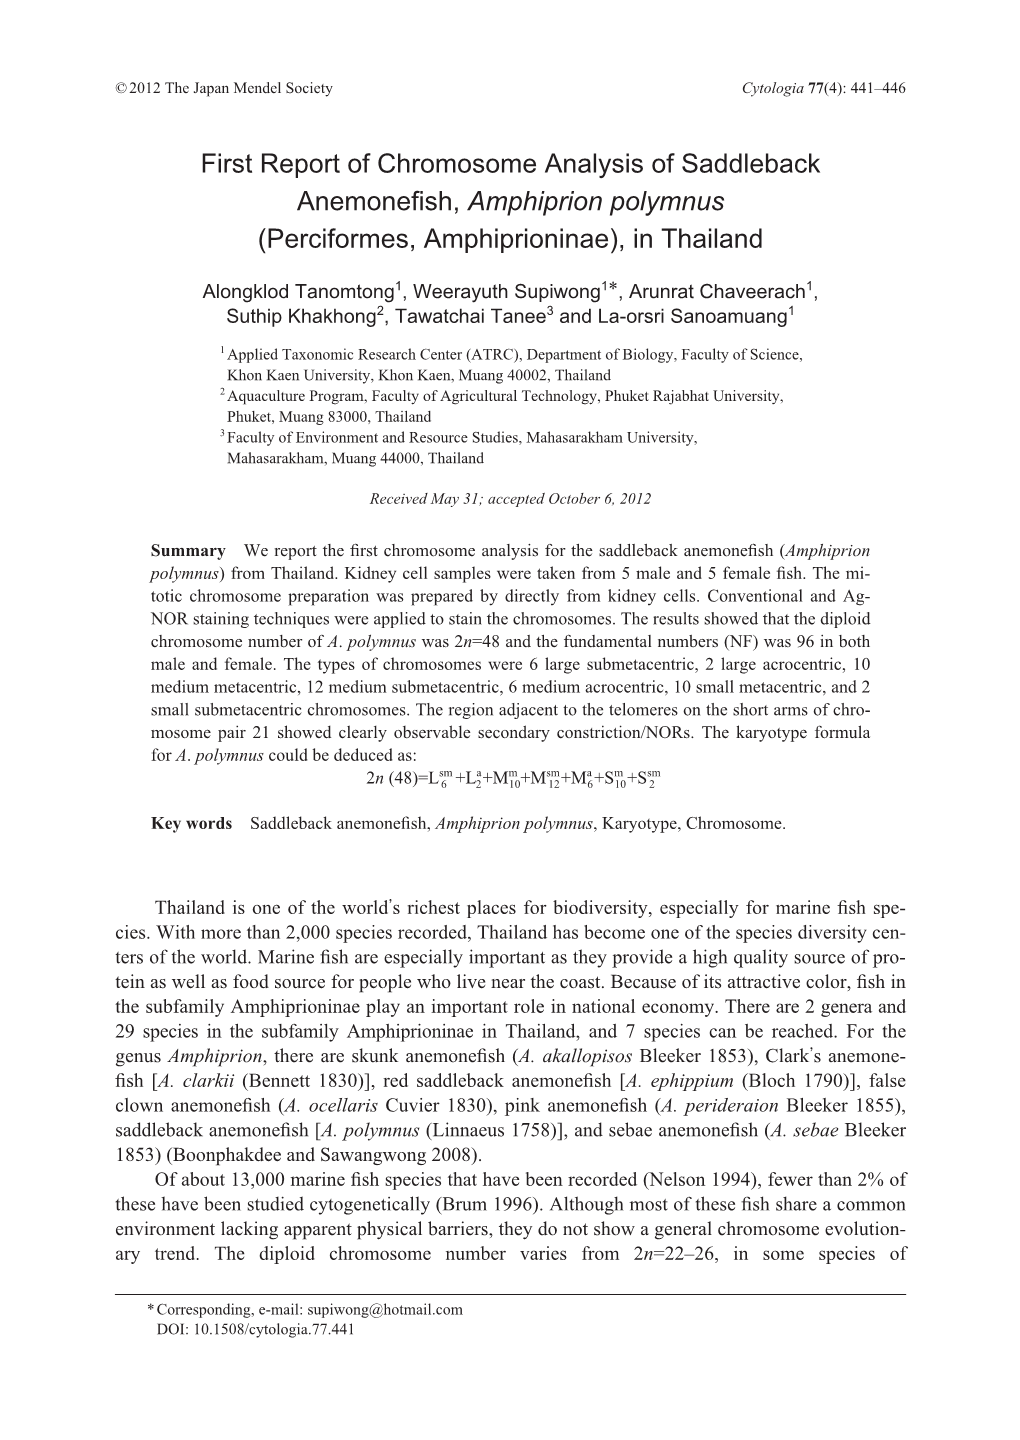 First Report of Chromosome Analysis of Saddleback Anemonefish